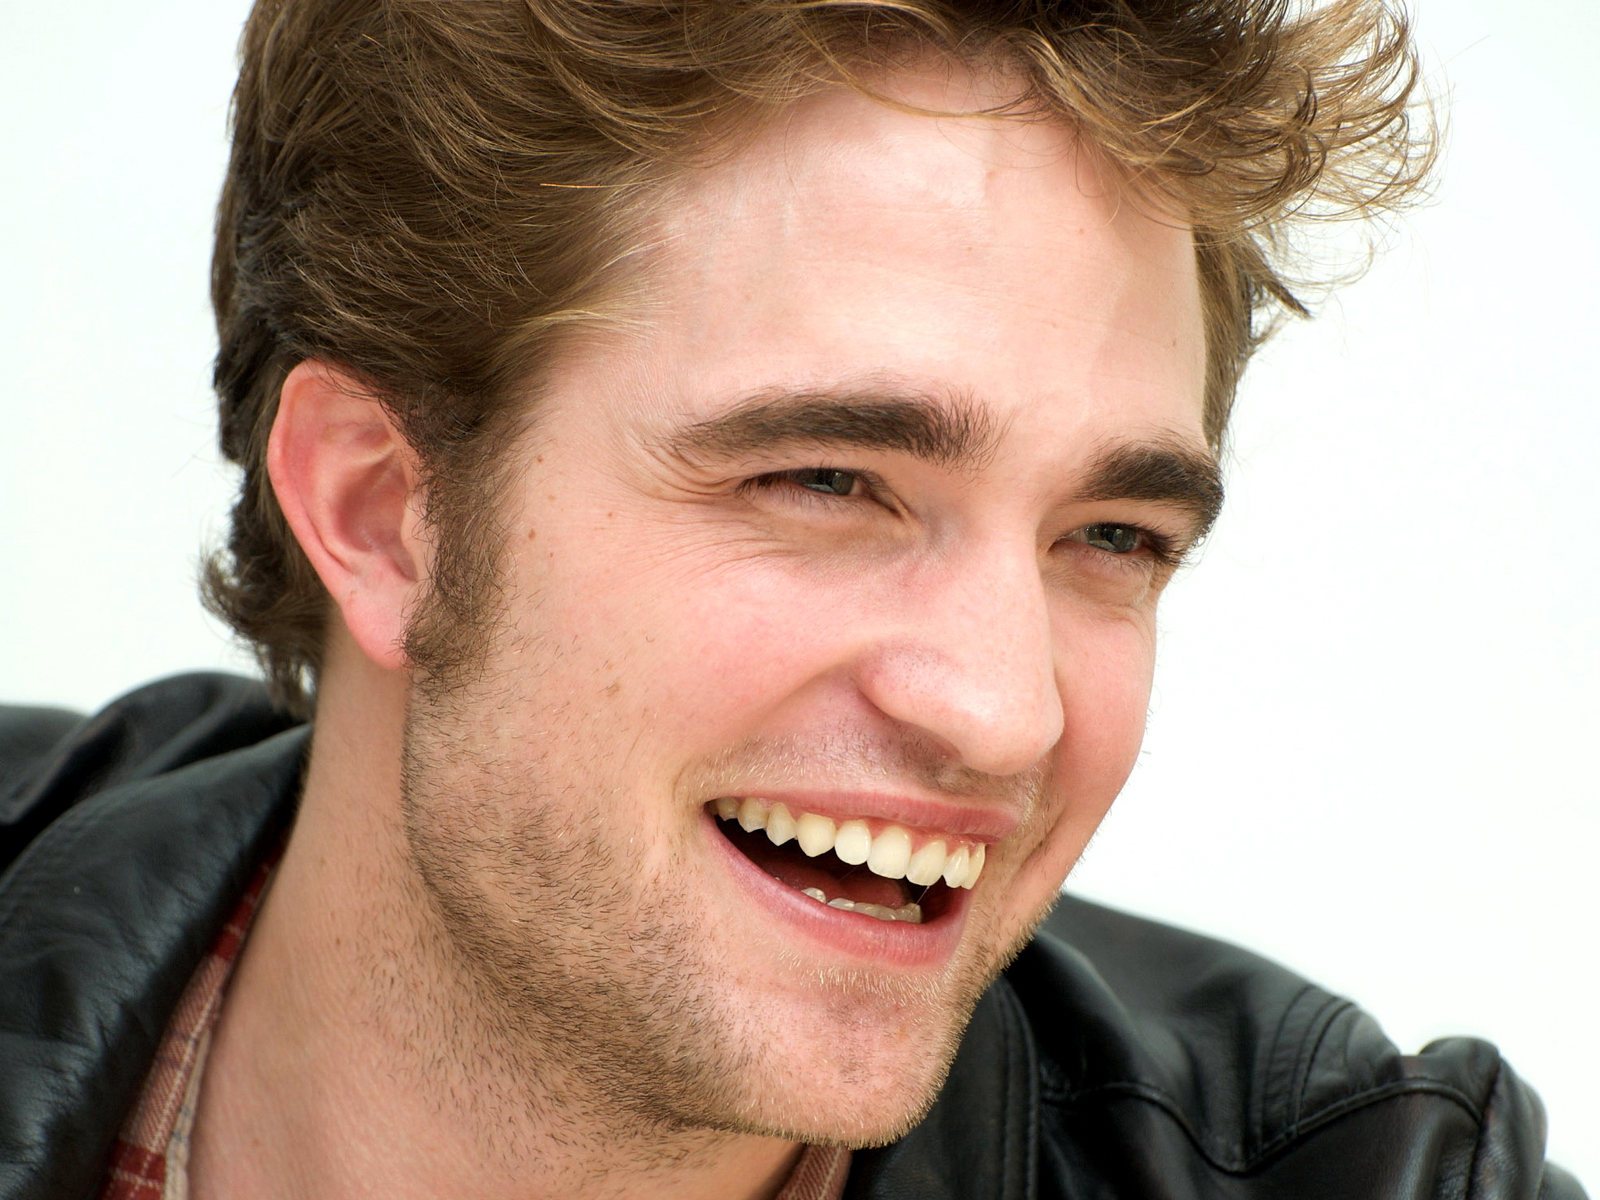 Robert Pattinson Wallpaper And Screensavers